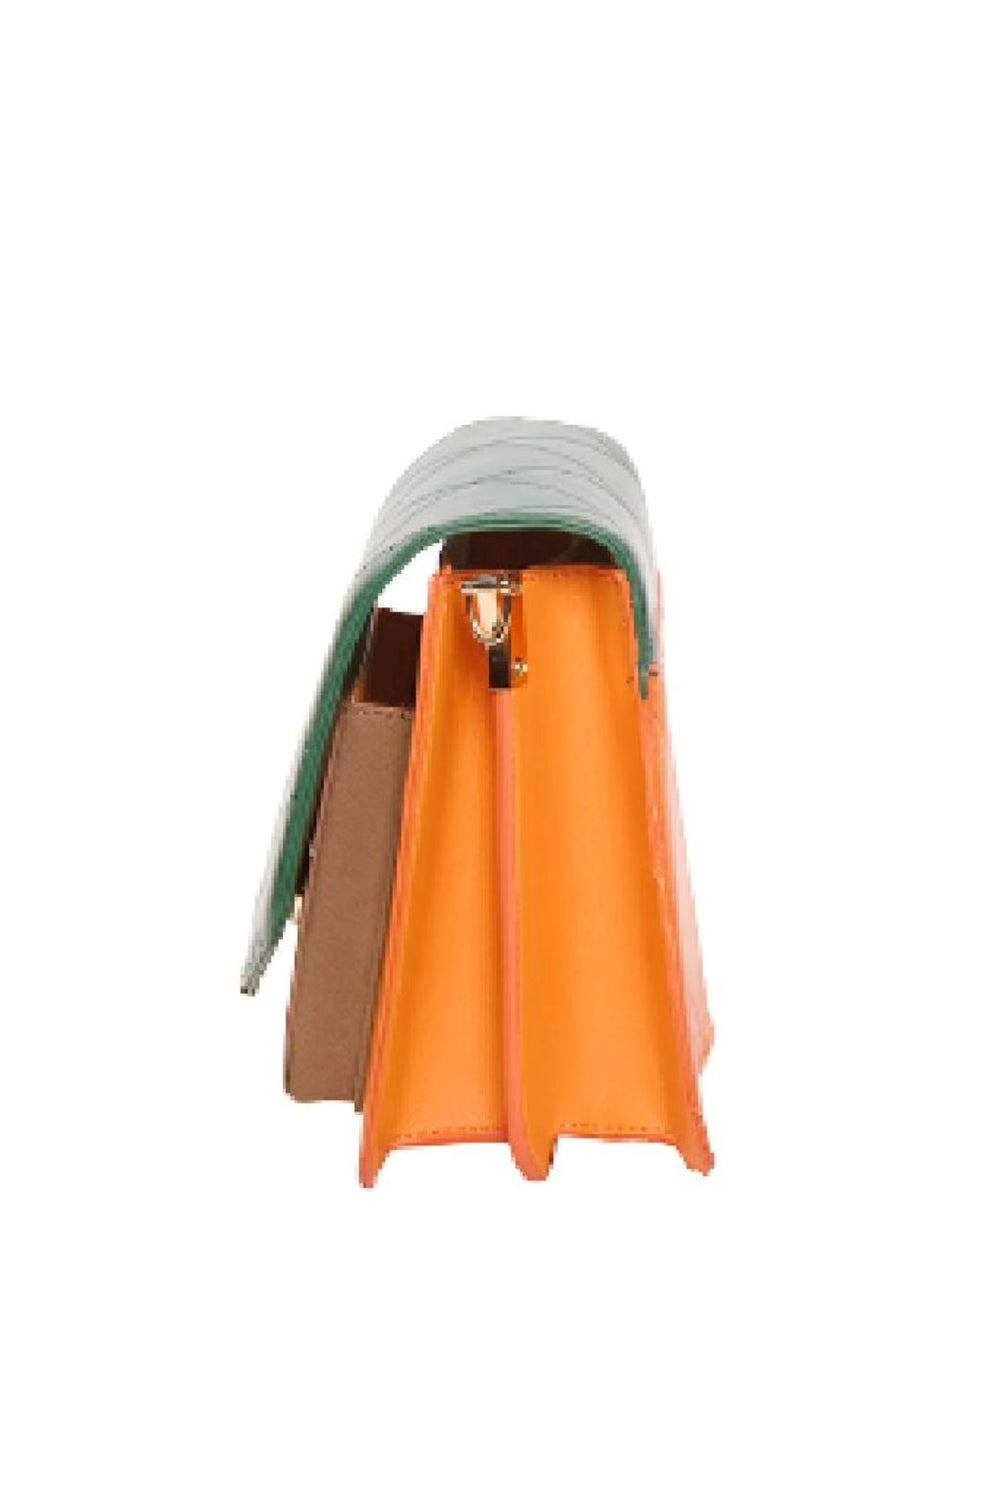 Noella - Blanca Bag Medium - Dark Green/Orange/Taupe Tasker 